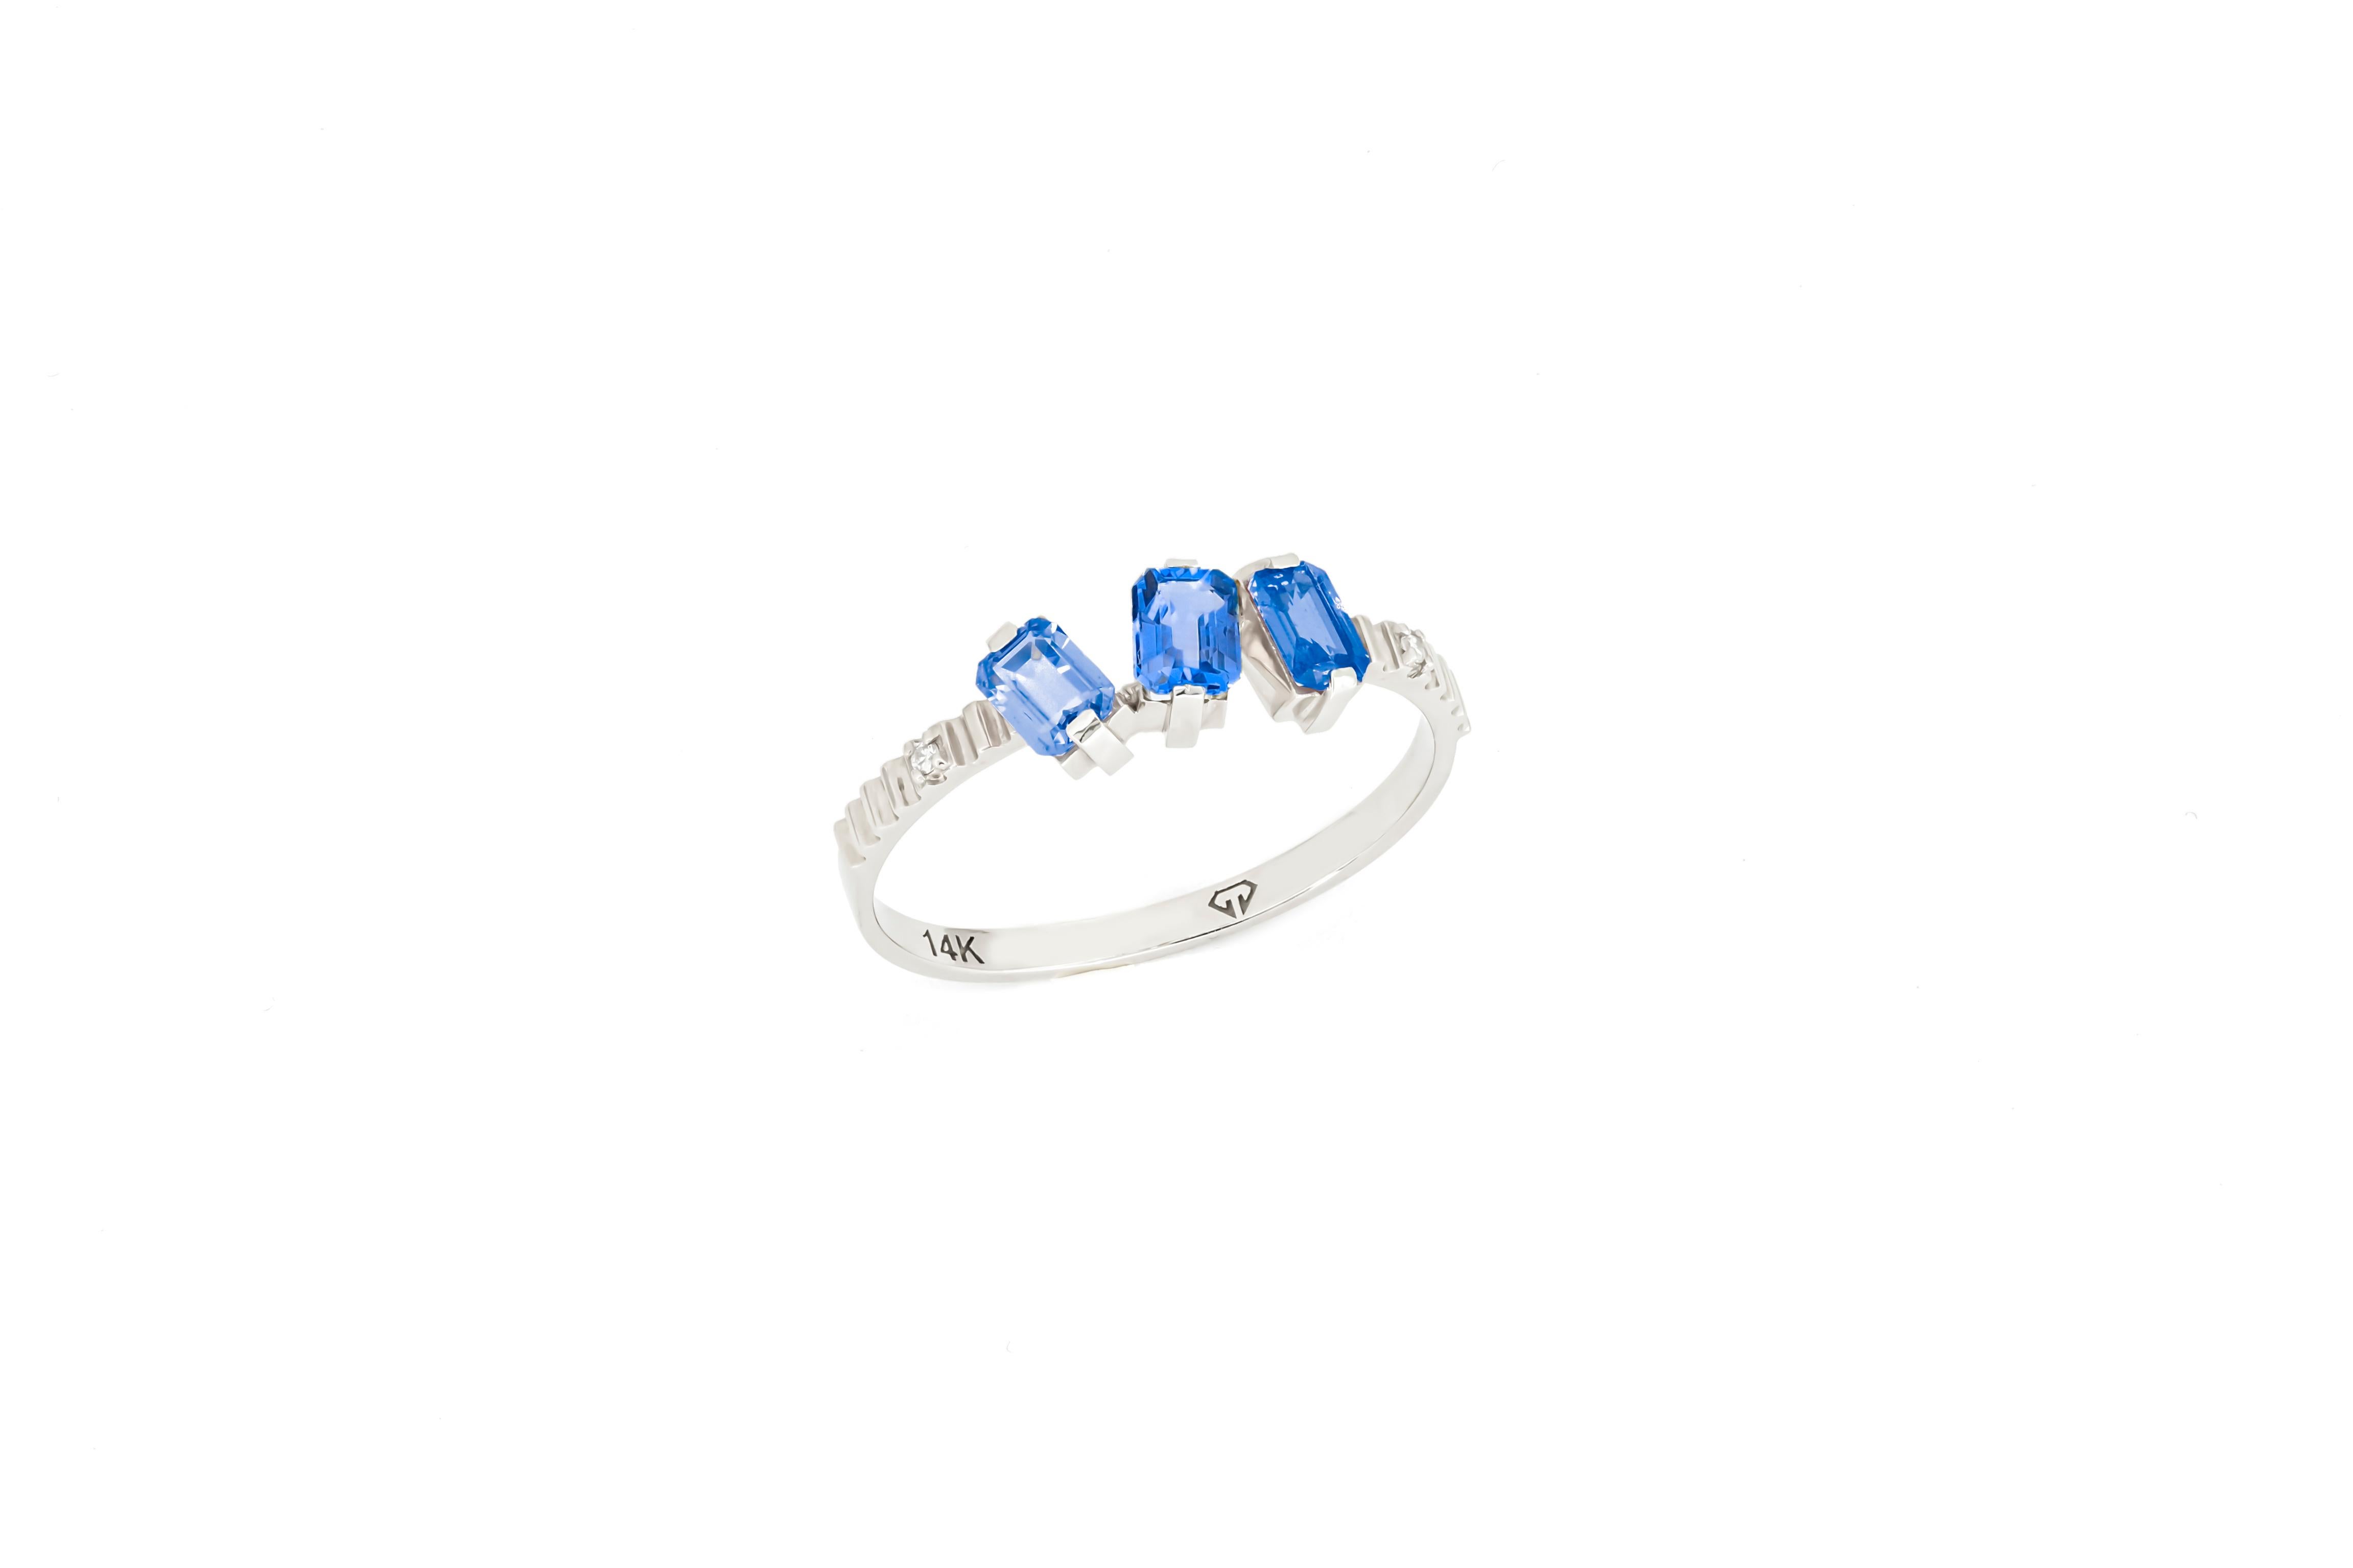 For Sale:  Monochrome blue gemstone 14k ring.  6